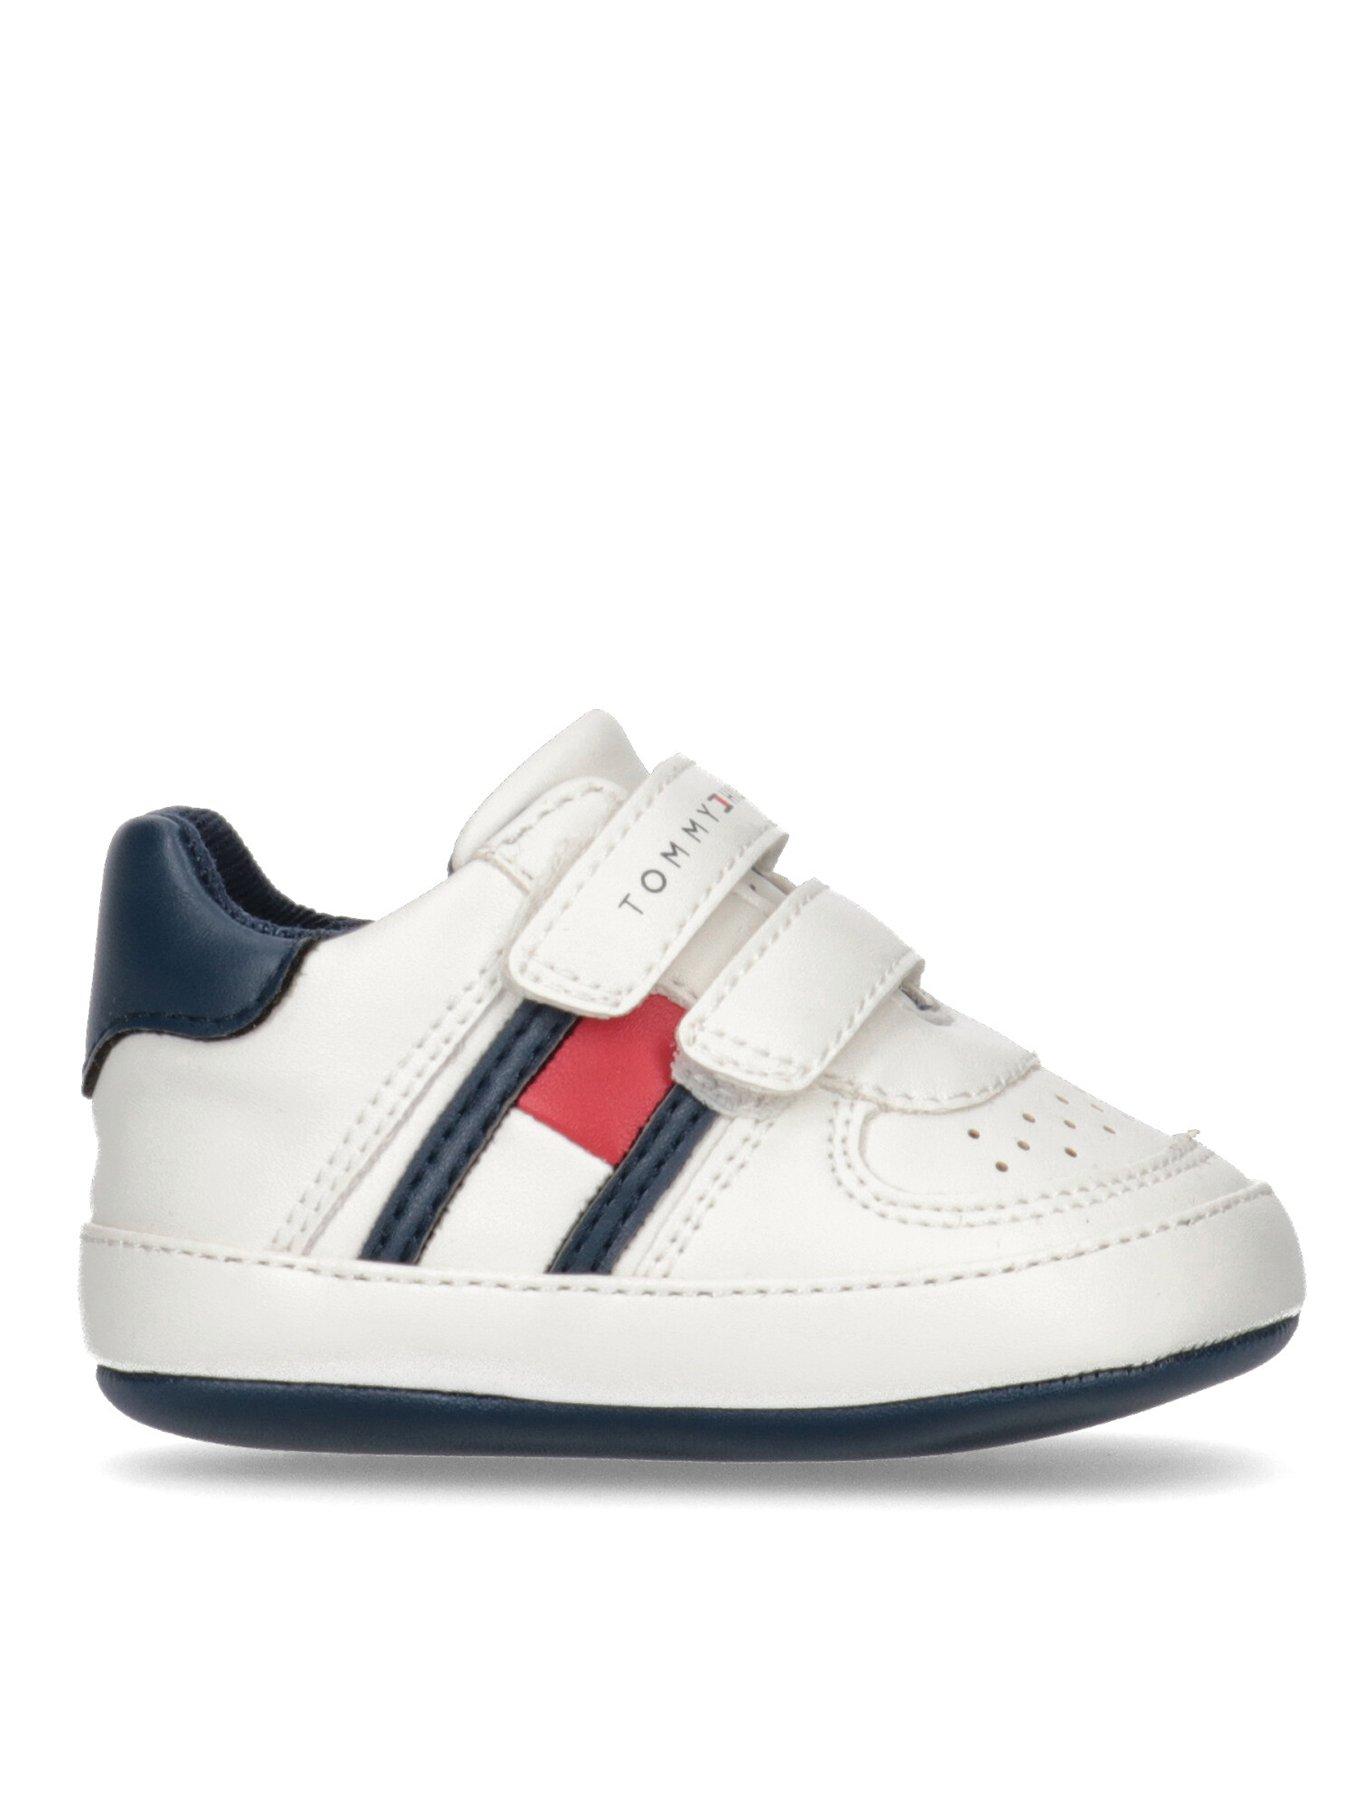 Tommy Hilfiger, Shoes, Tommy Hilfiger Toddler Red Racer Loop Hook  Sneakers Size 6